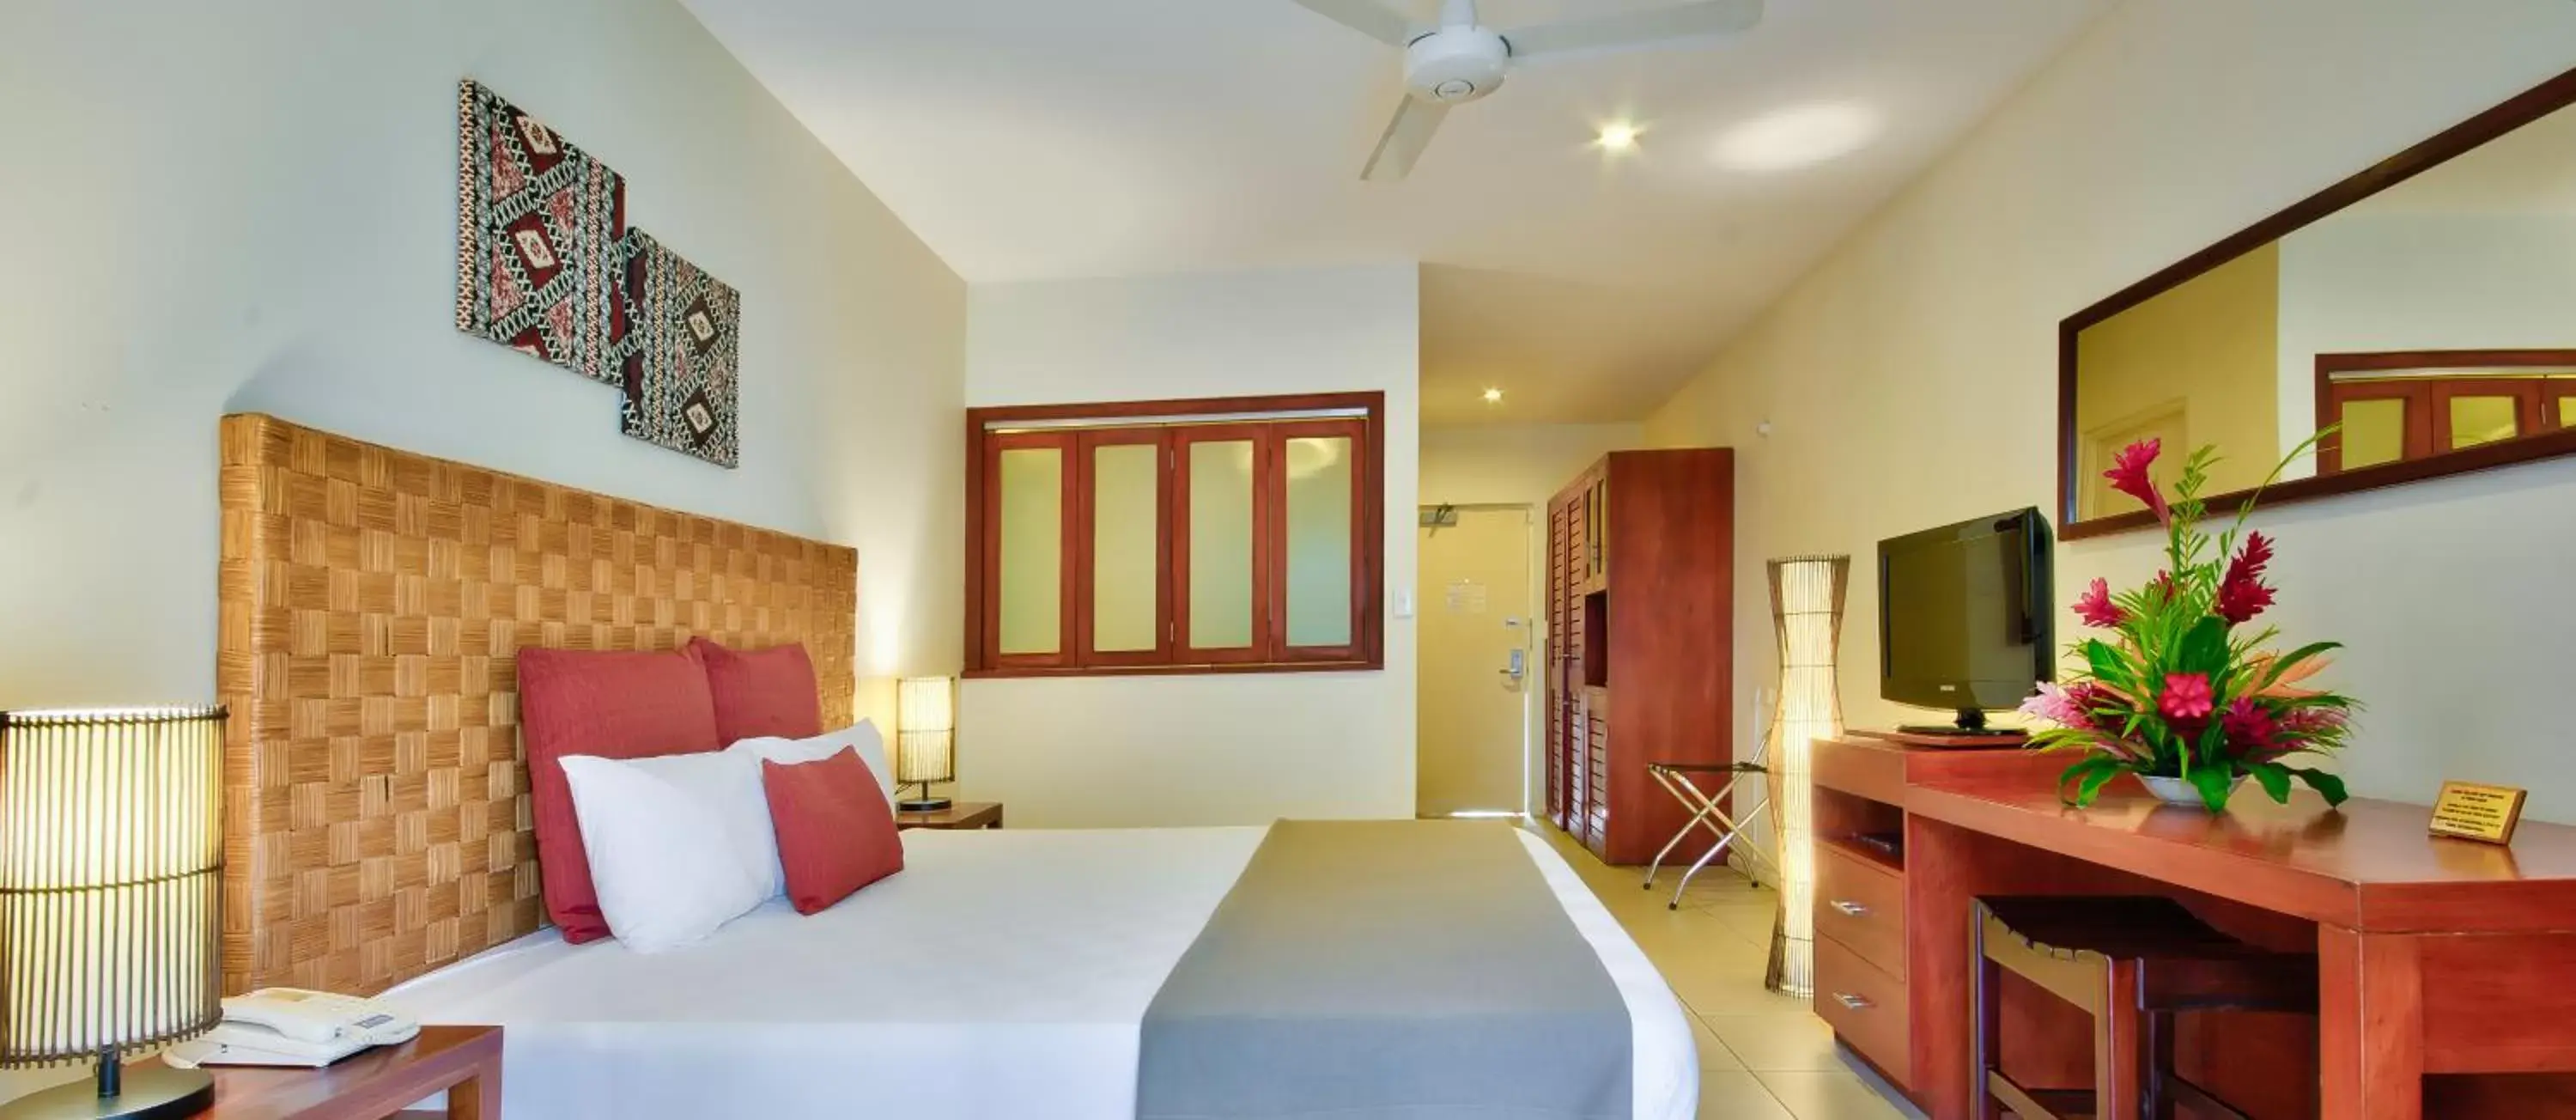 Bedroom in Tanoa International Hotel